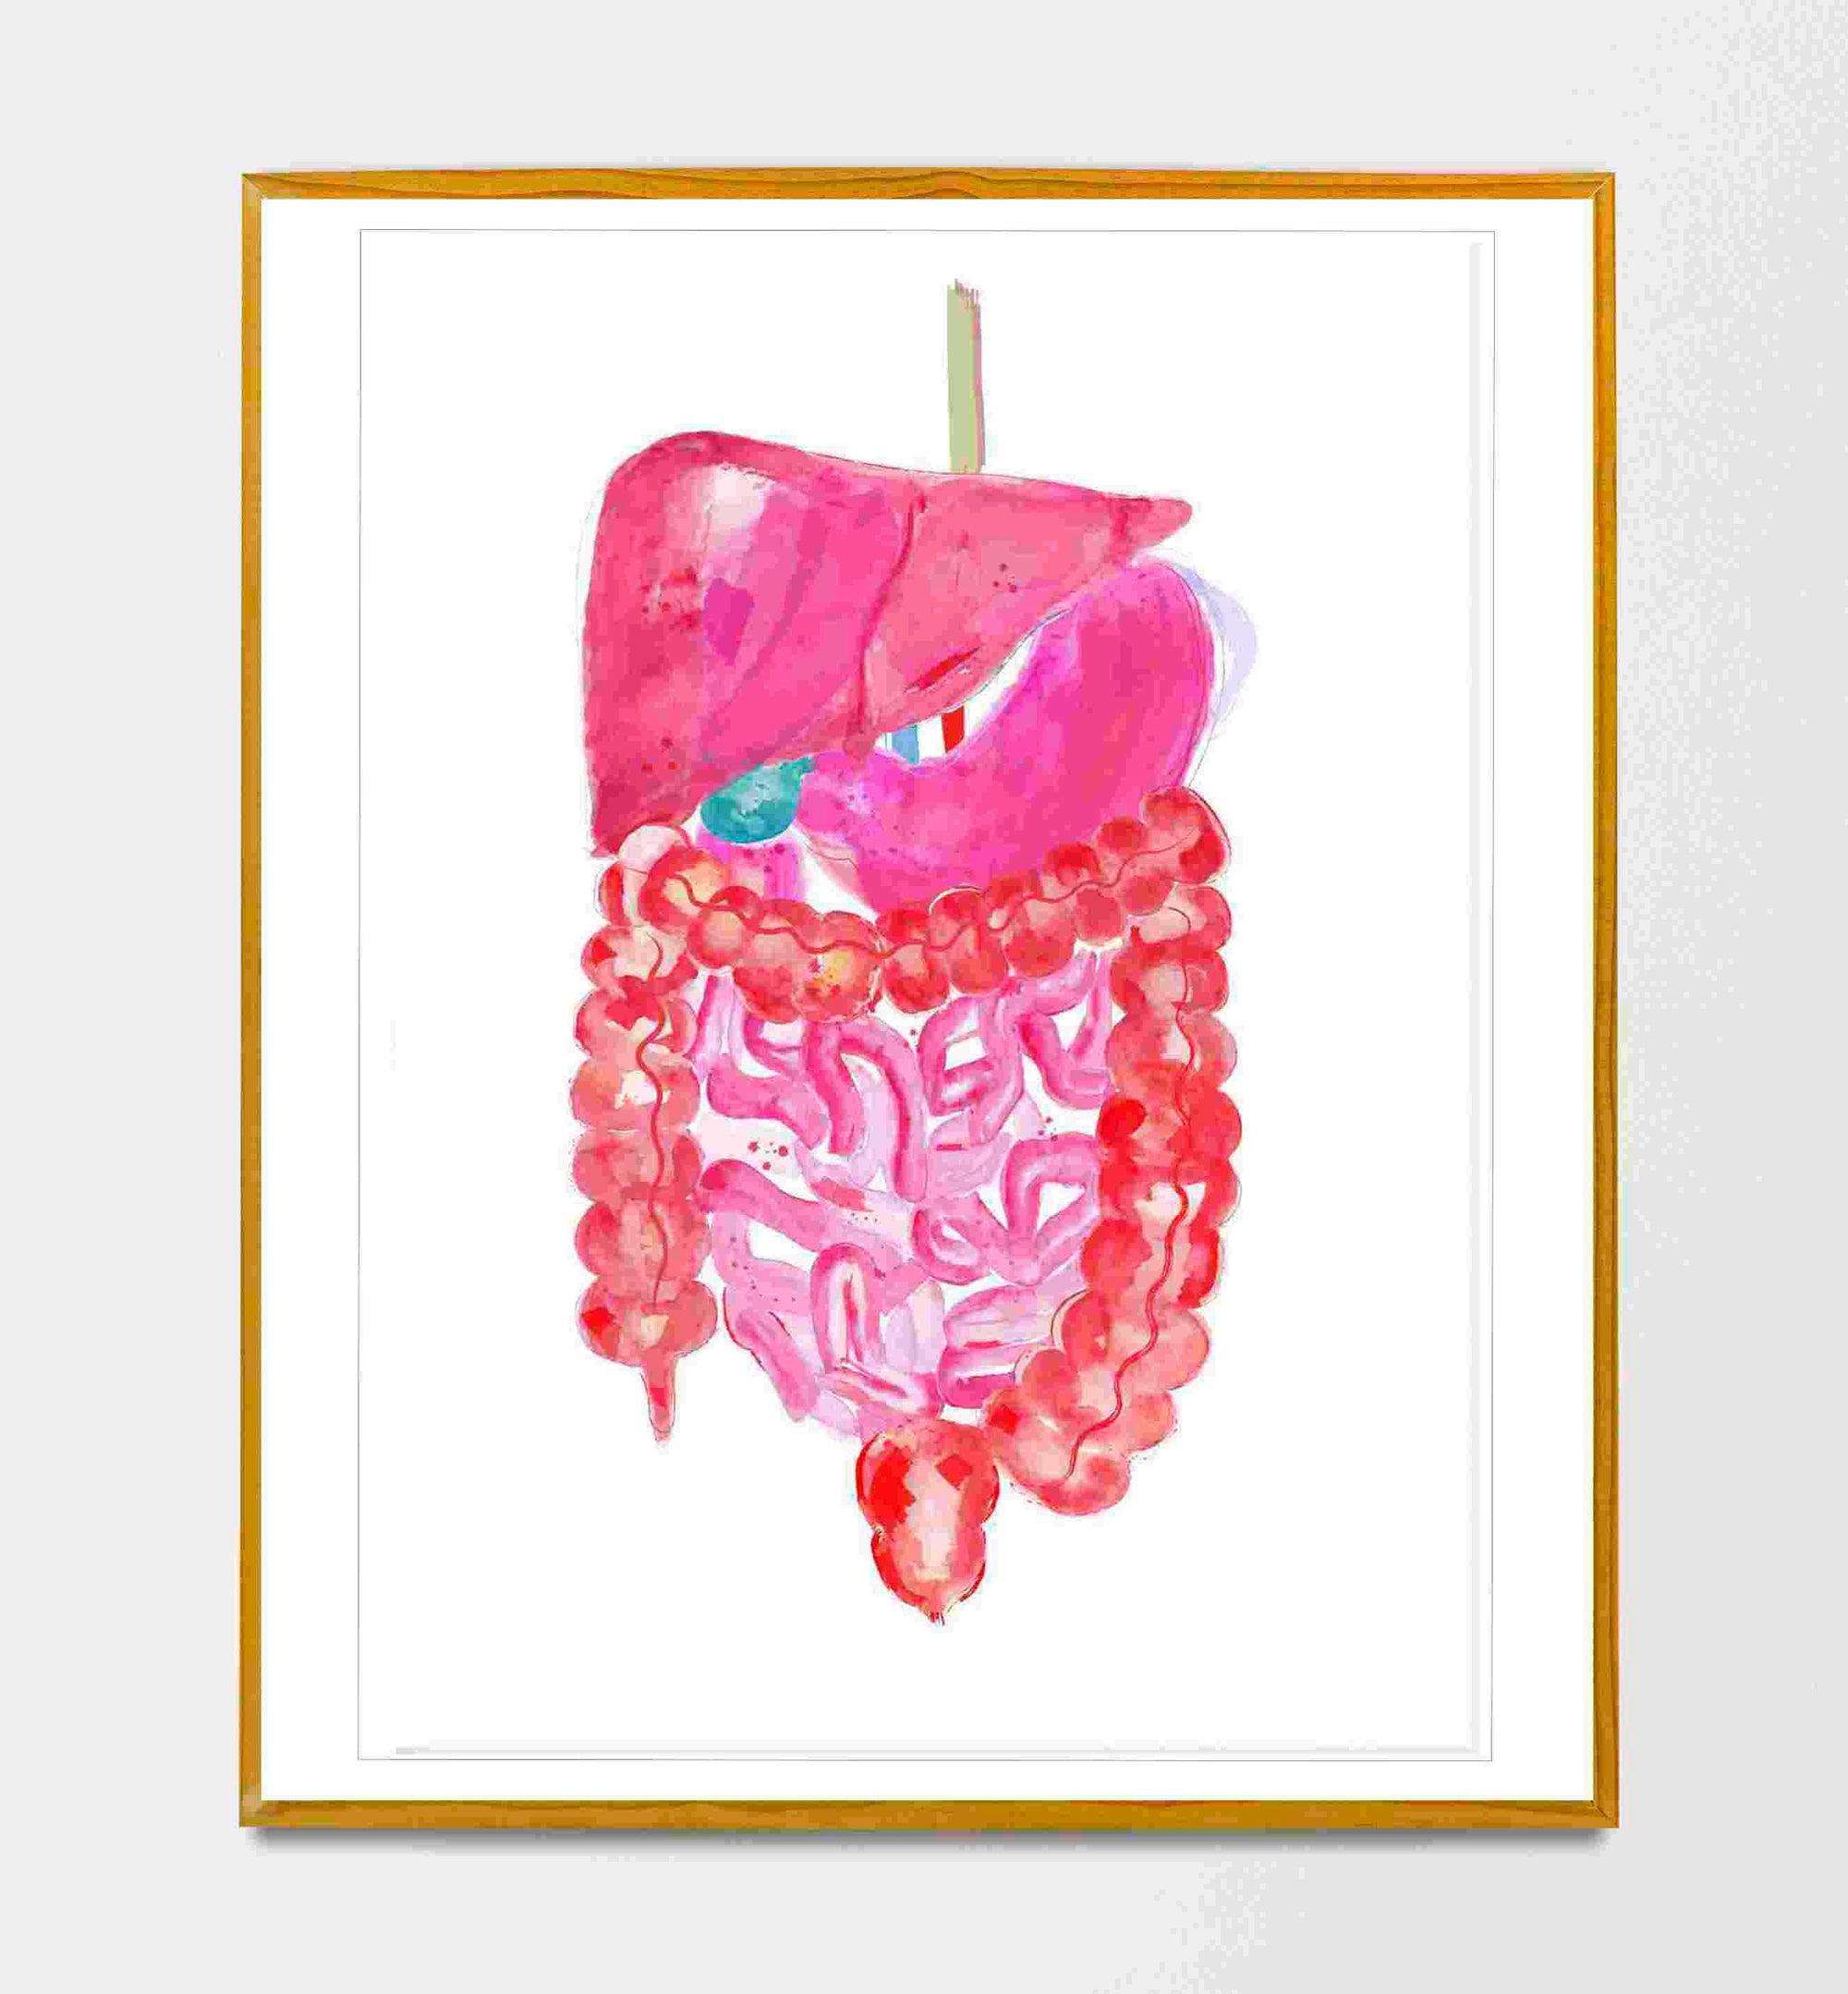 Abdominal Anatomy, Gastrointestinal Print, General Surgery Art